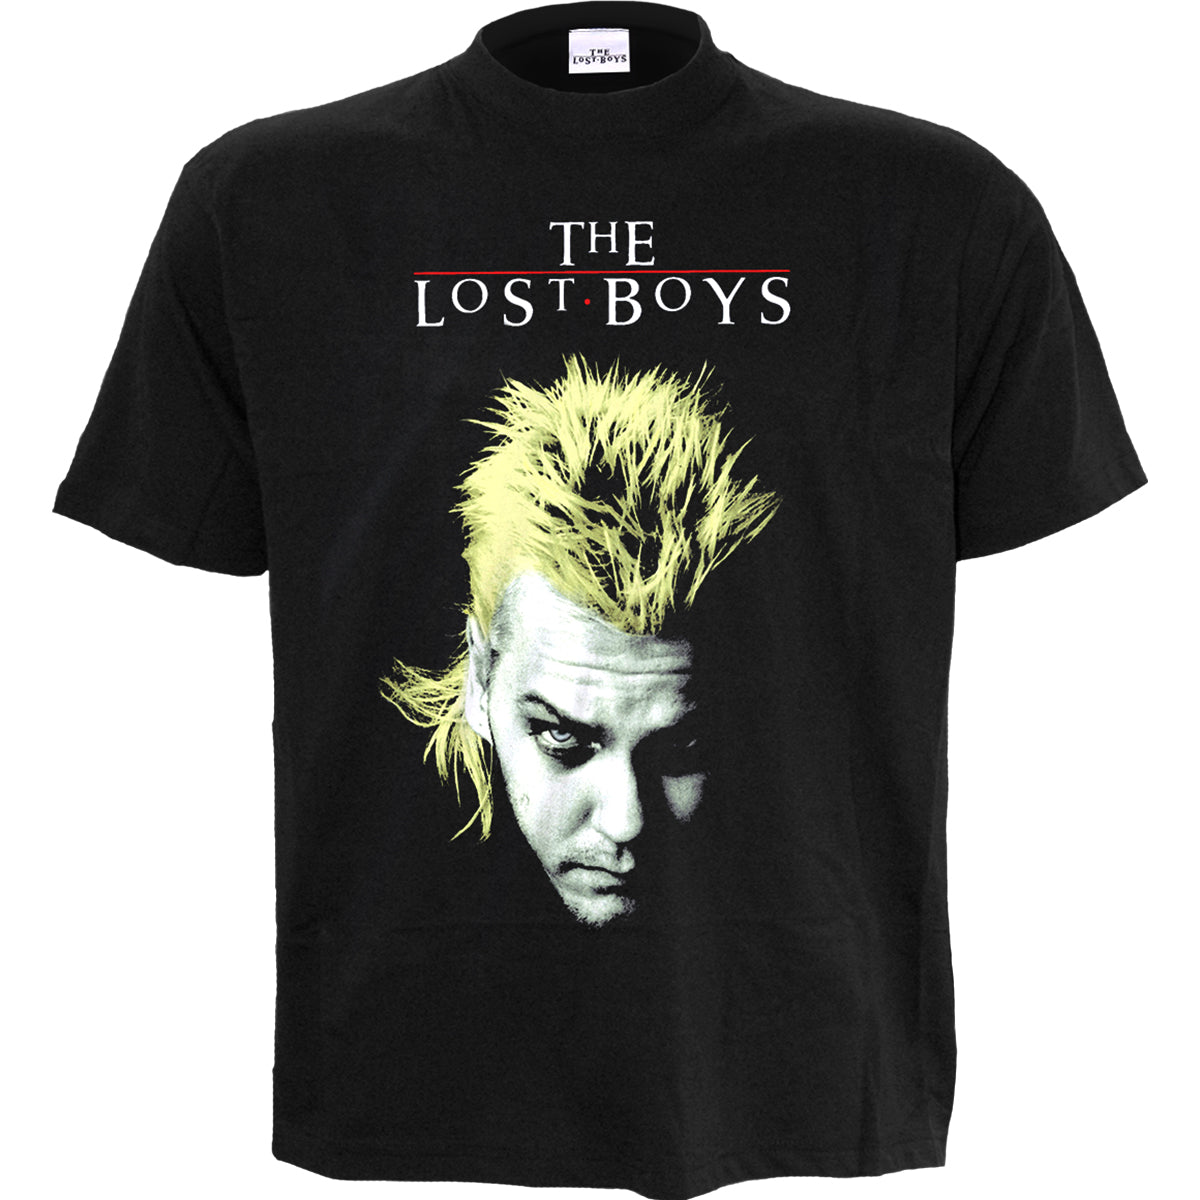 THE LOST BOYS - DAVID AND LOGO   - Front Print T-Shirt Black